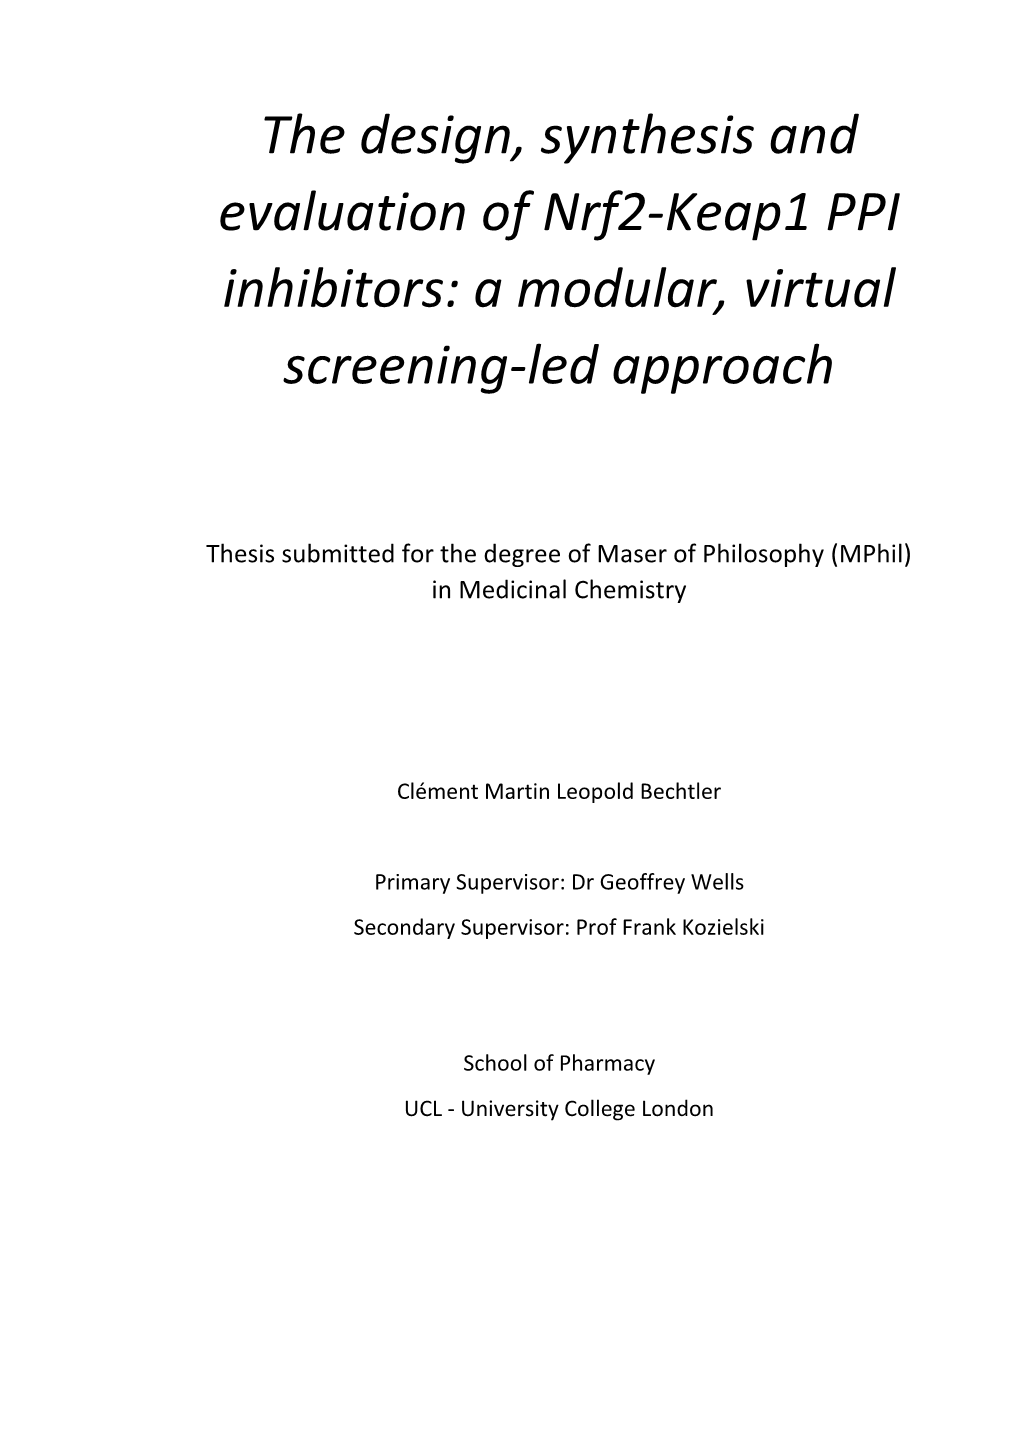 A Modular, Virtual Screening-Led Approach